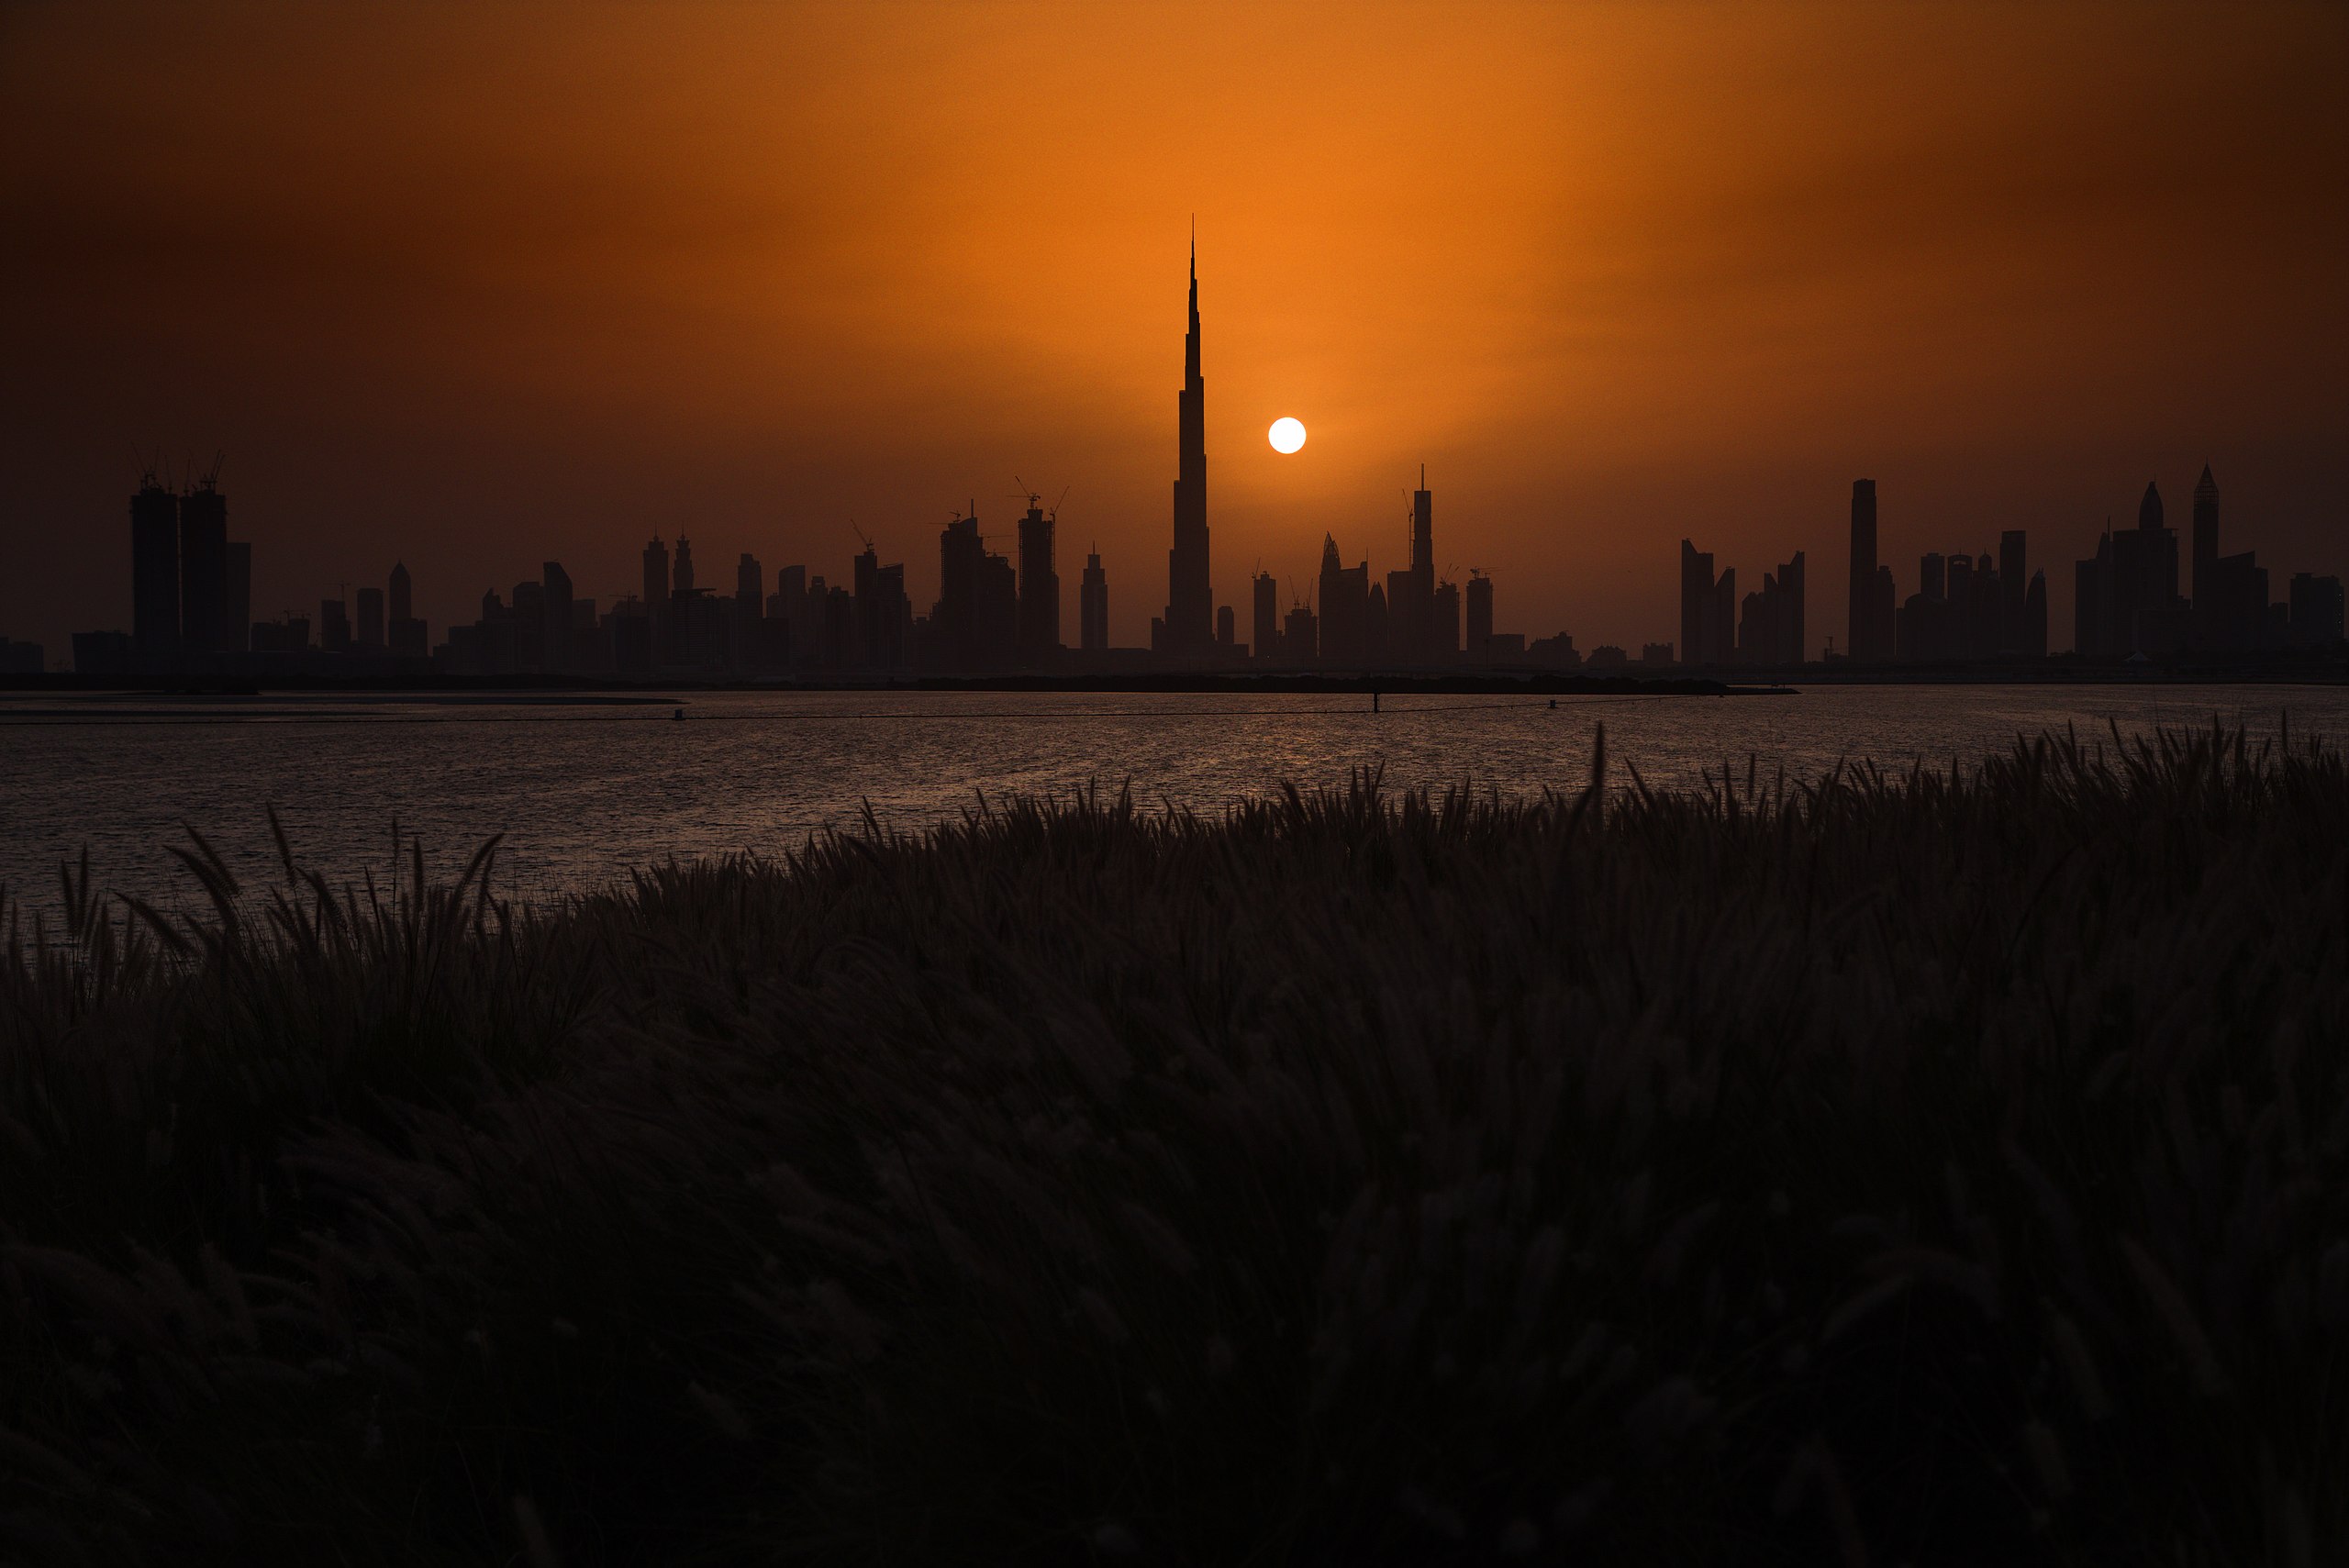 Dubai mandates BIM for new buildings - Global Construction Review